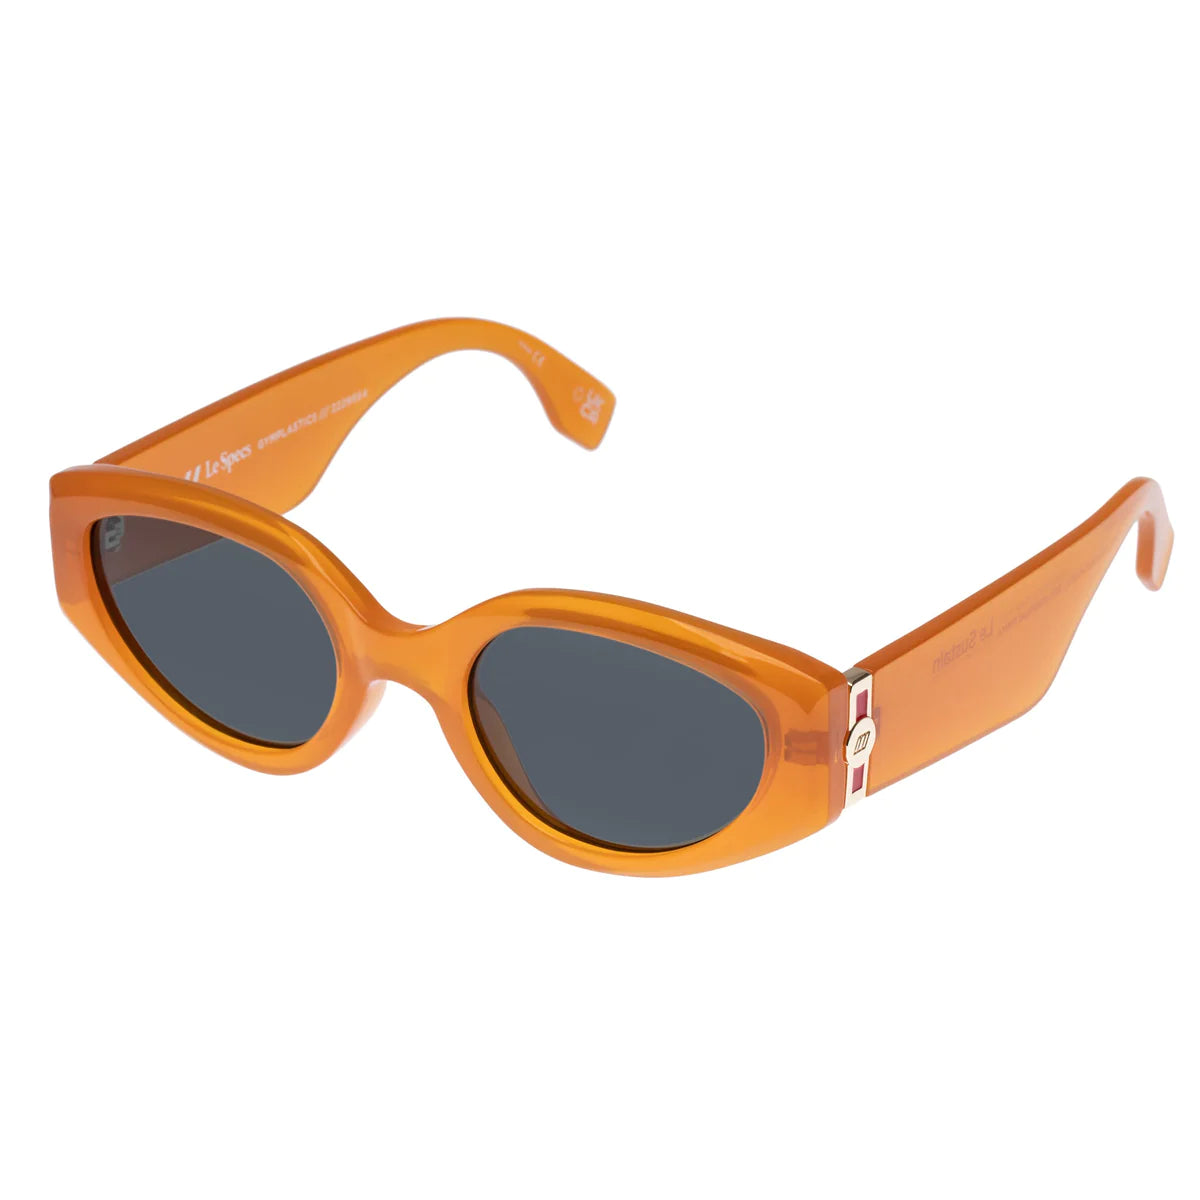 gymplastics sunglasses